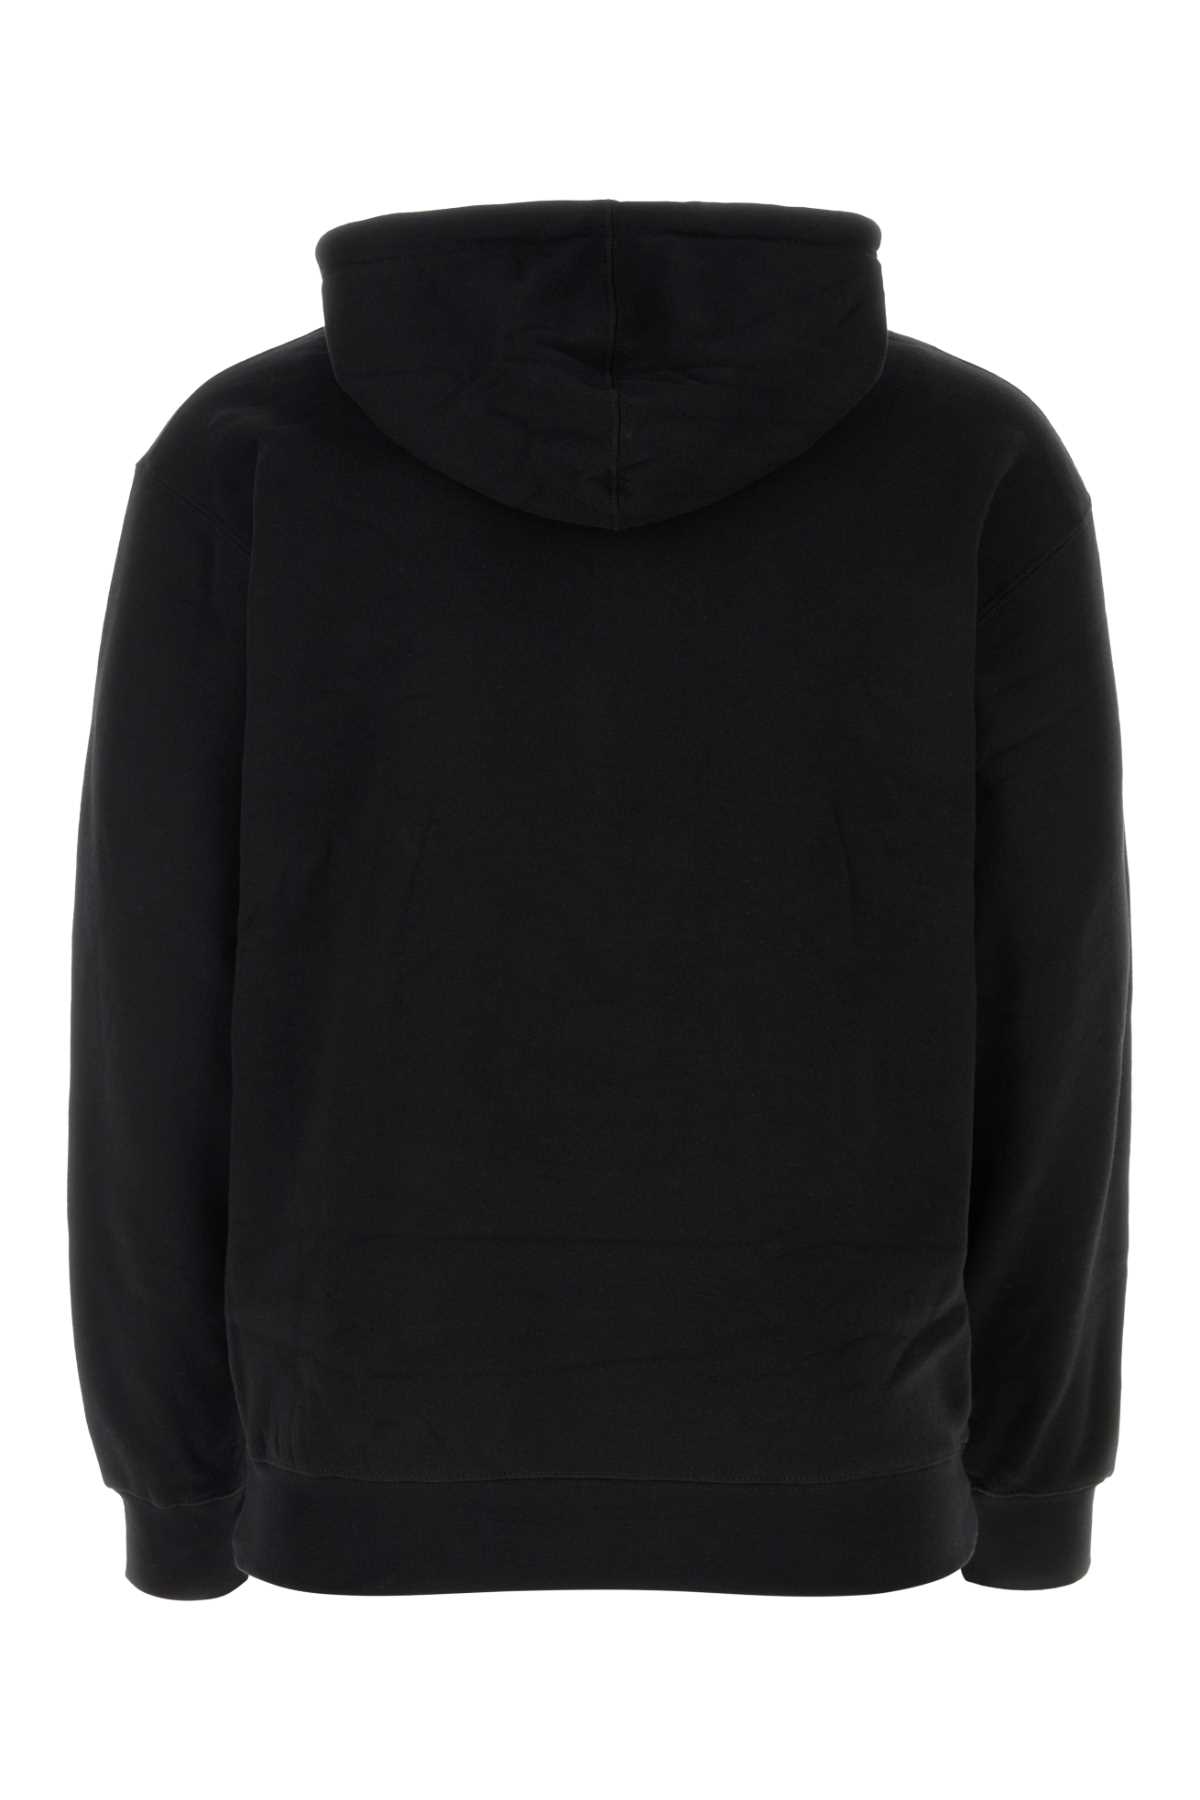 Kidsuper Black Cotton Blend Sweatshirt